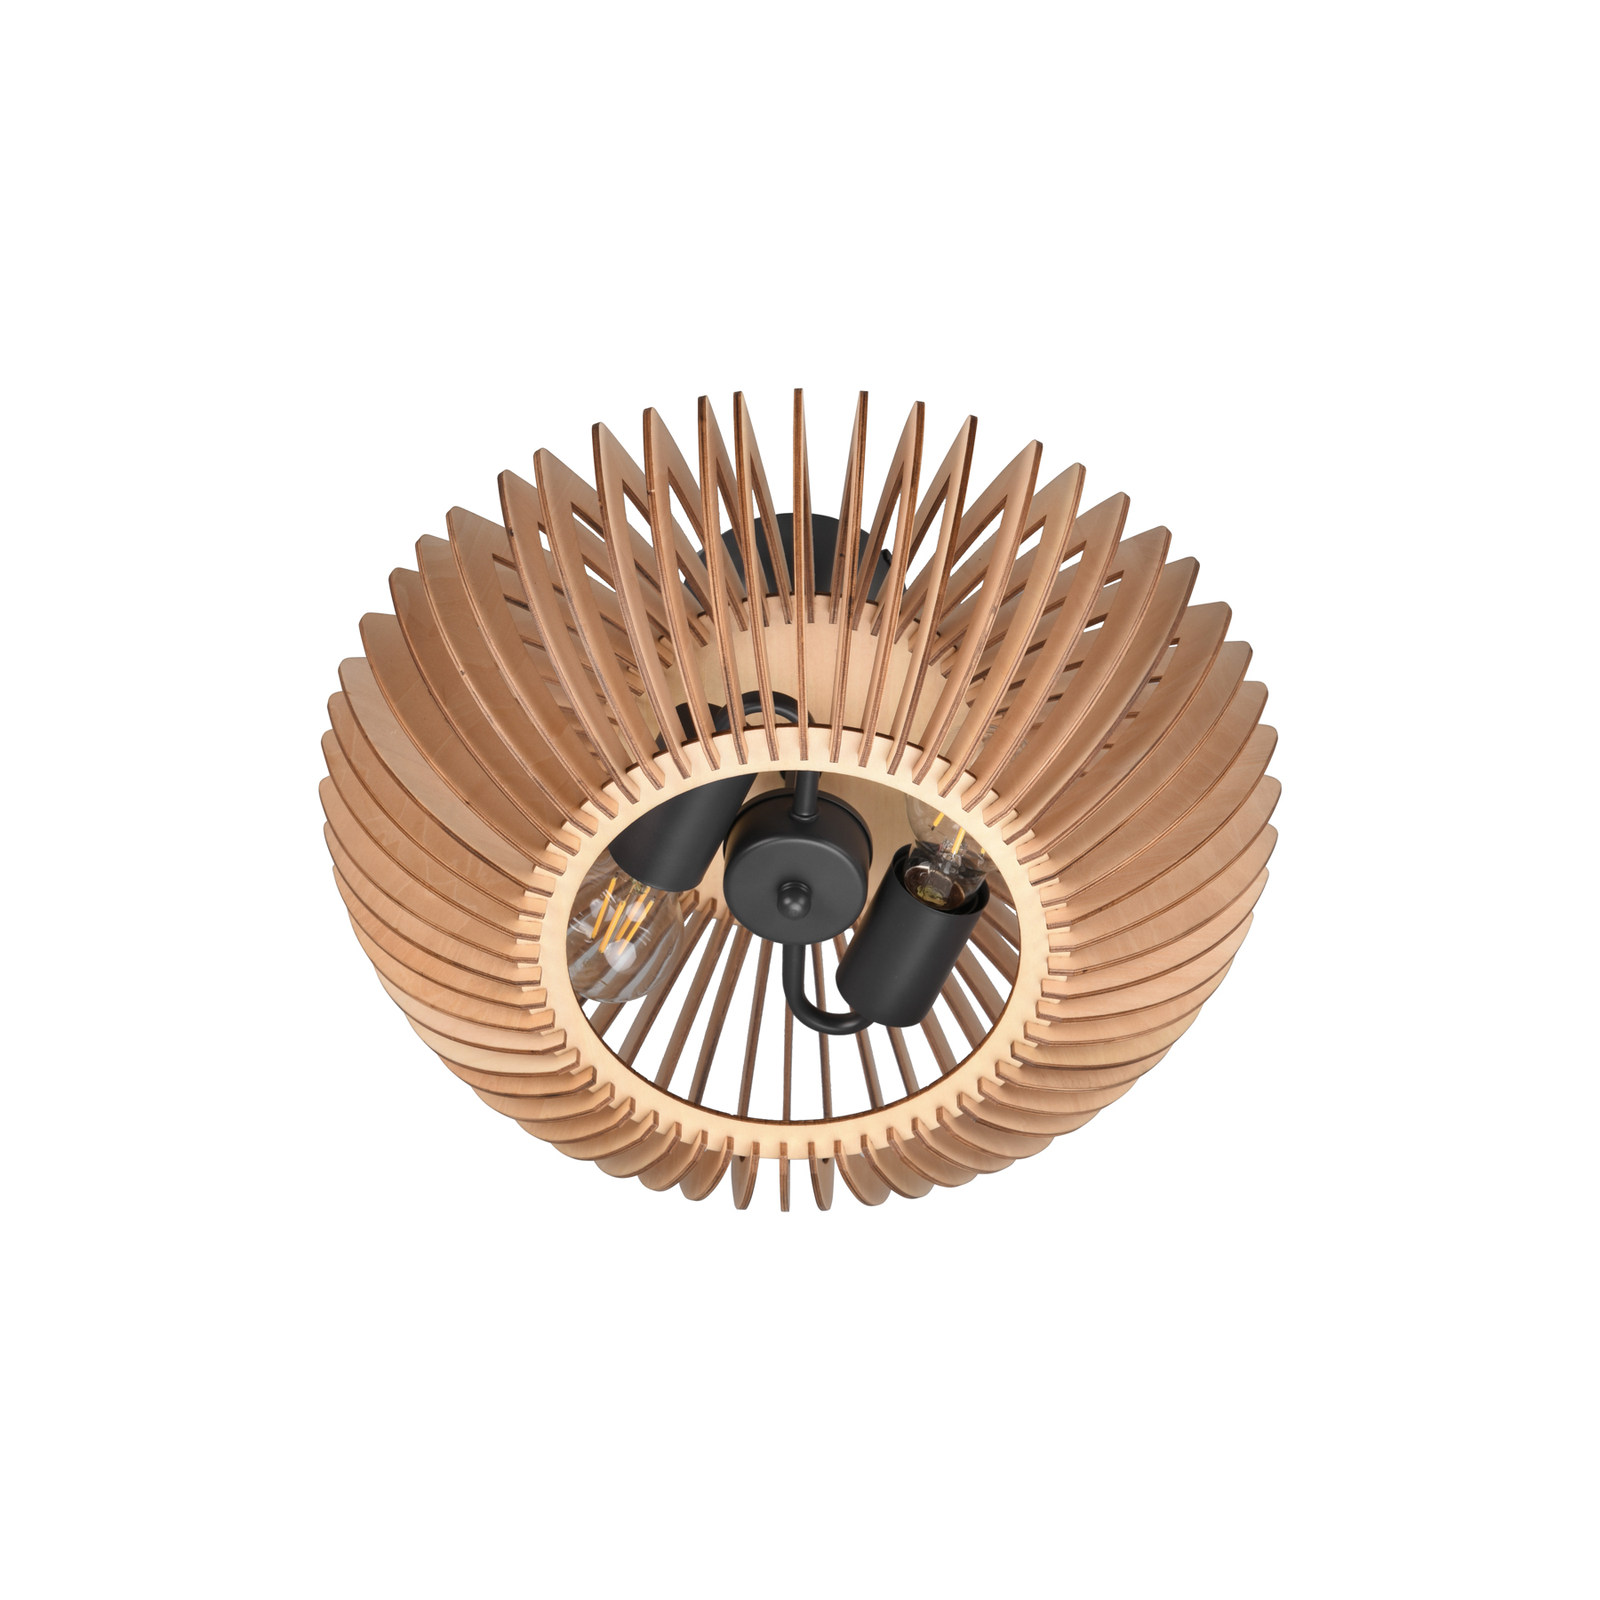 Colino ceiling lamp, wooden slats, light wood